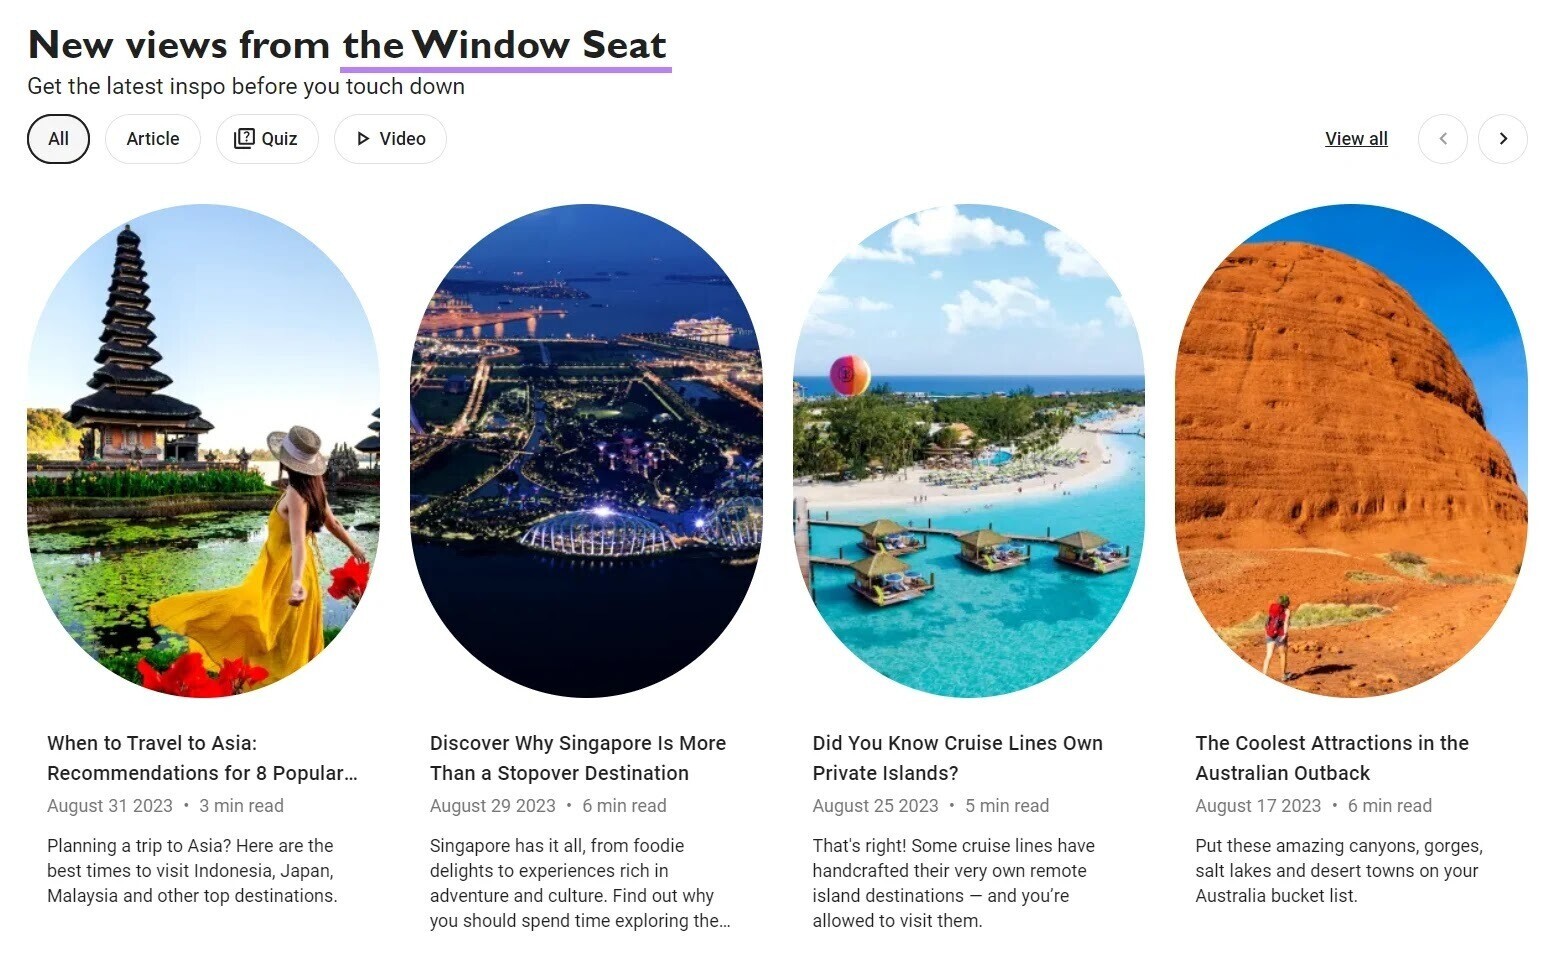 “The Window Seat” travel blog